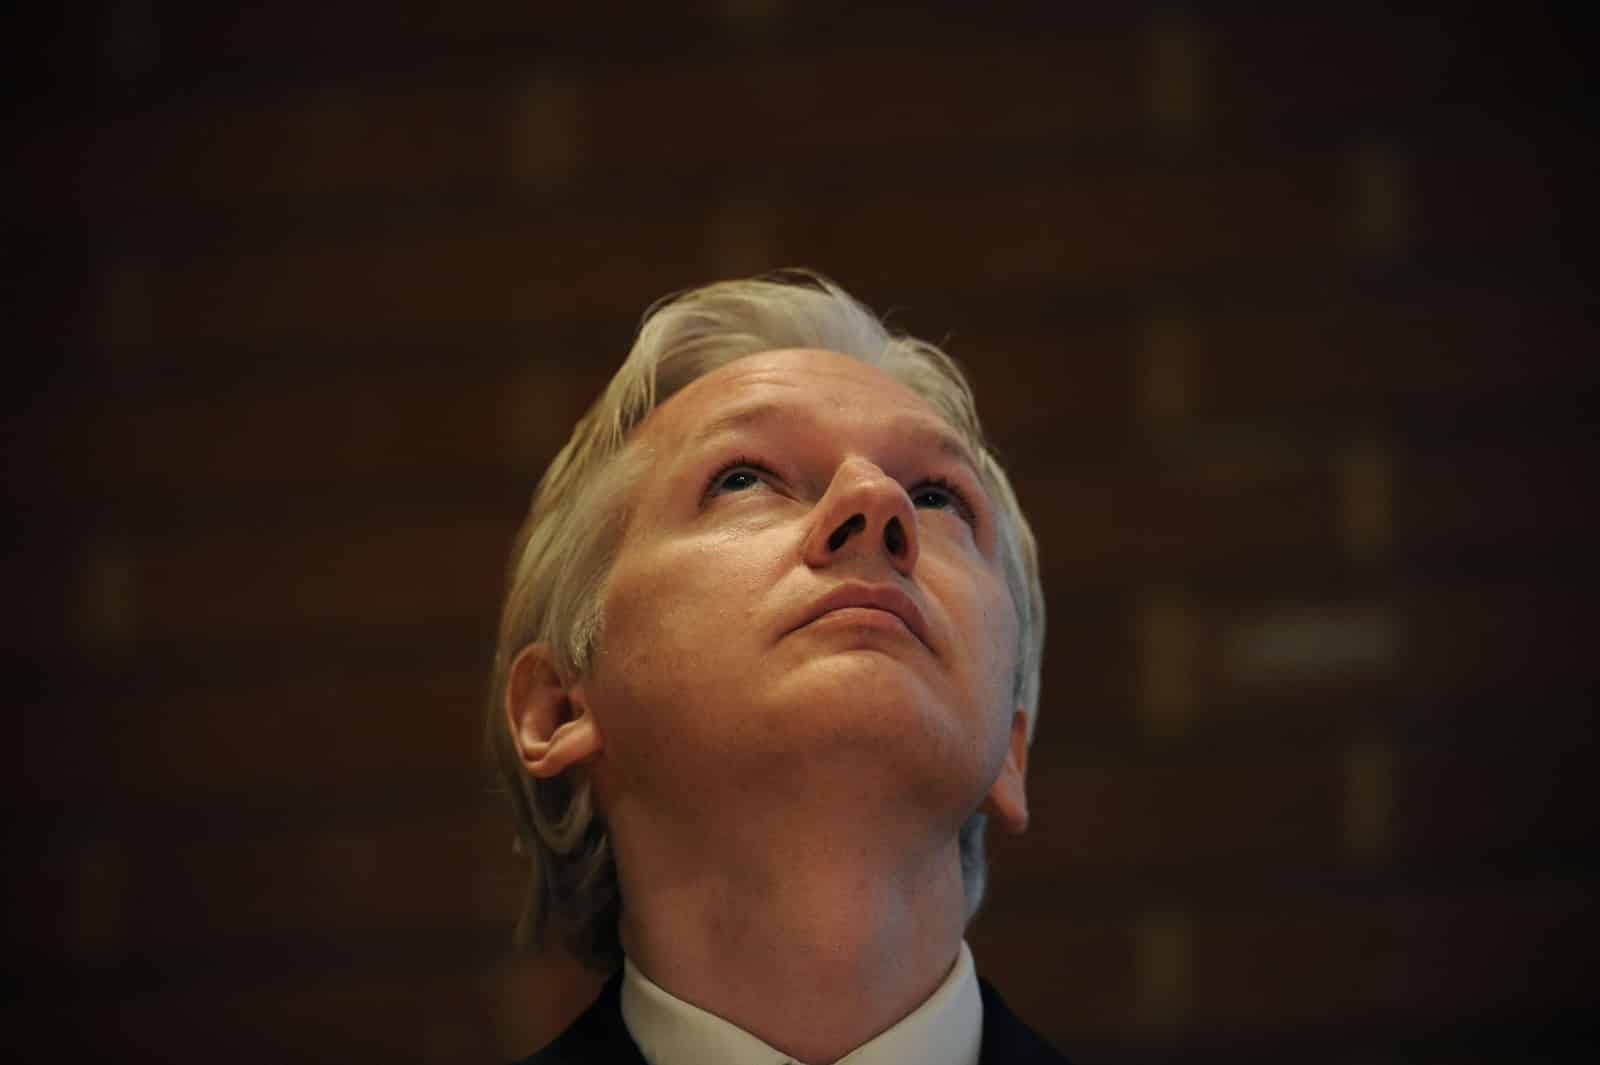 Sweden's investigation into Julian Assange was a political 